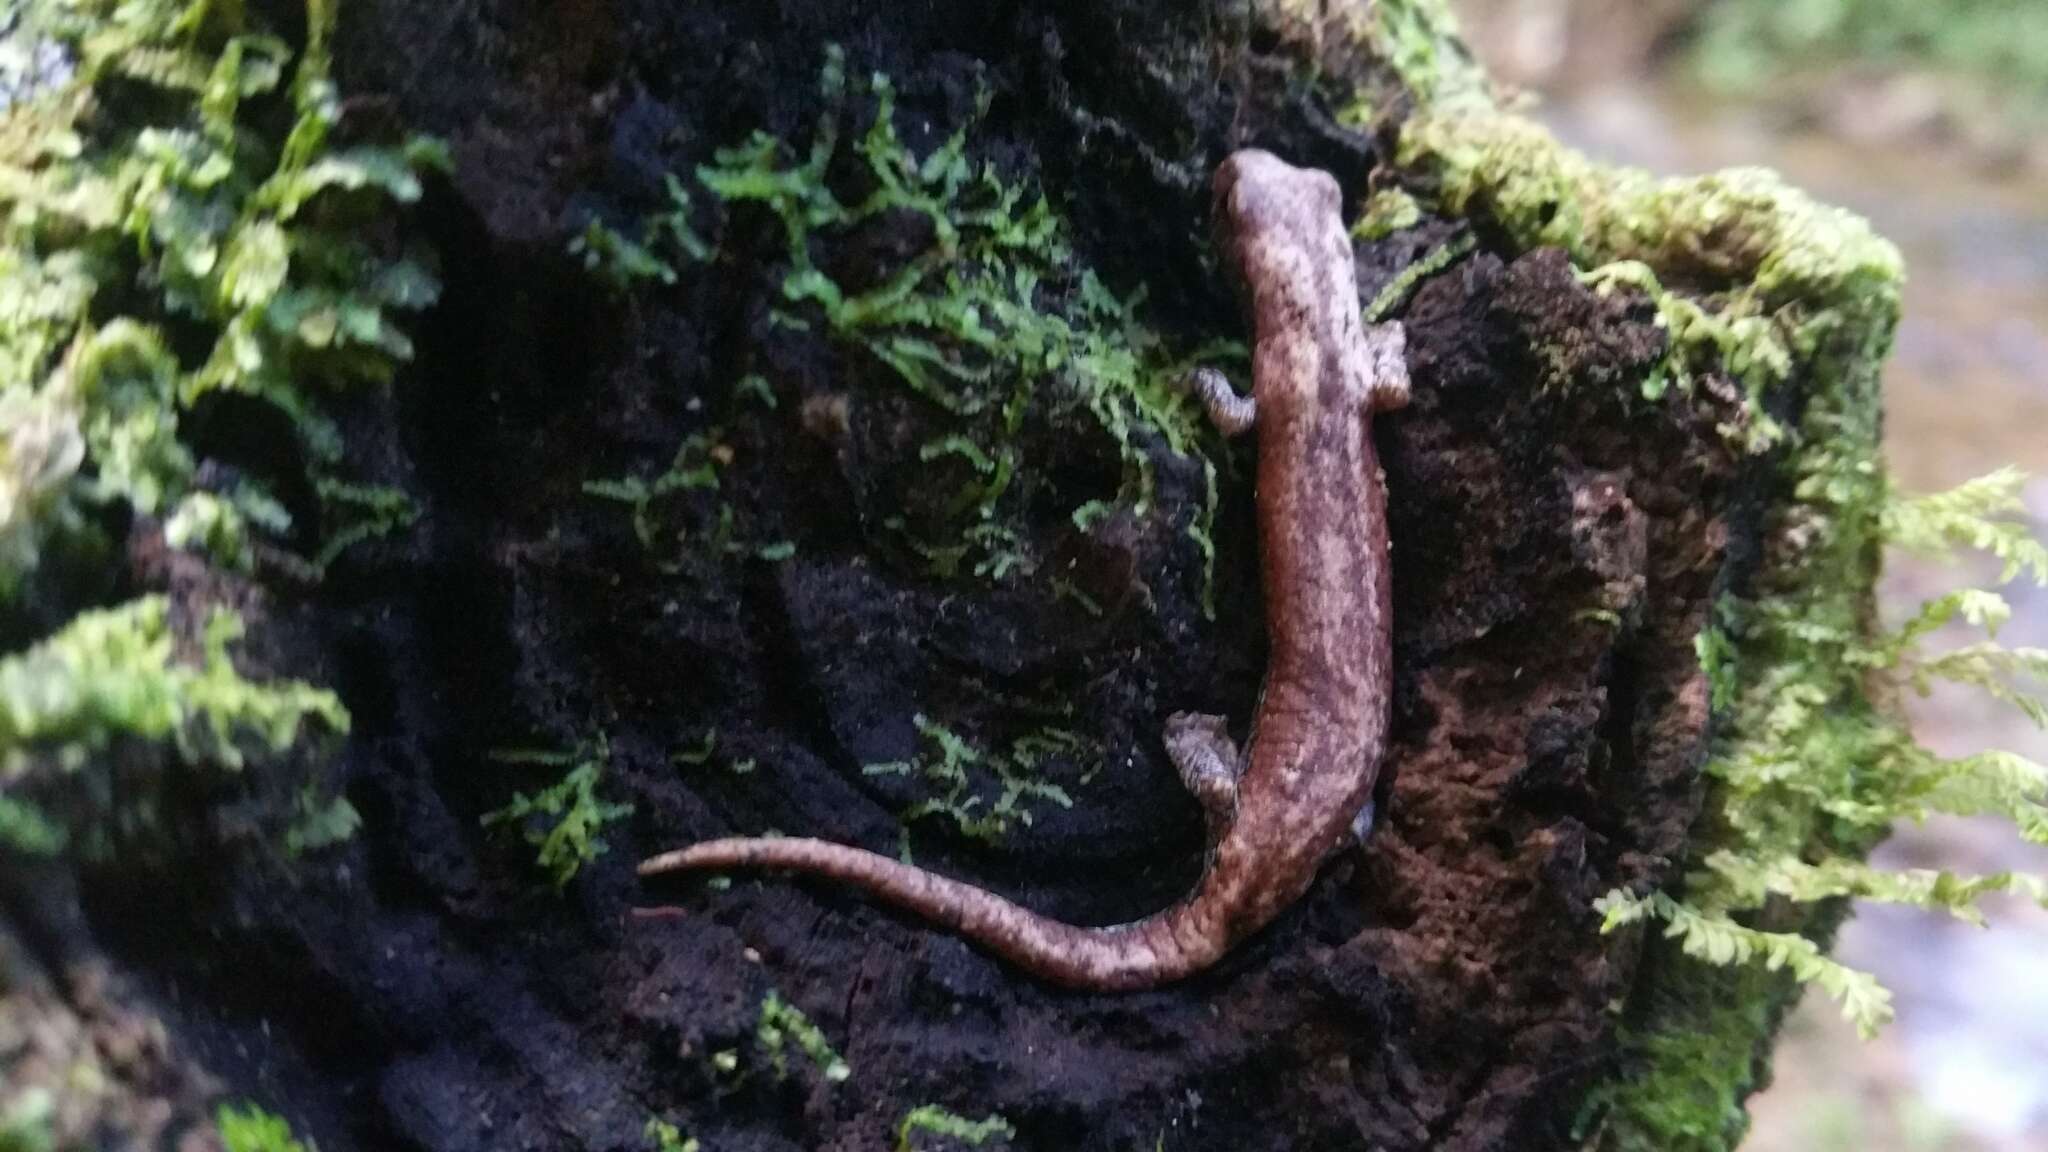 Image of Common Dwarf Salamander